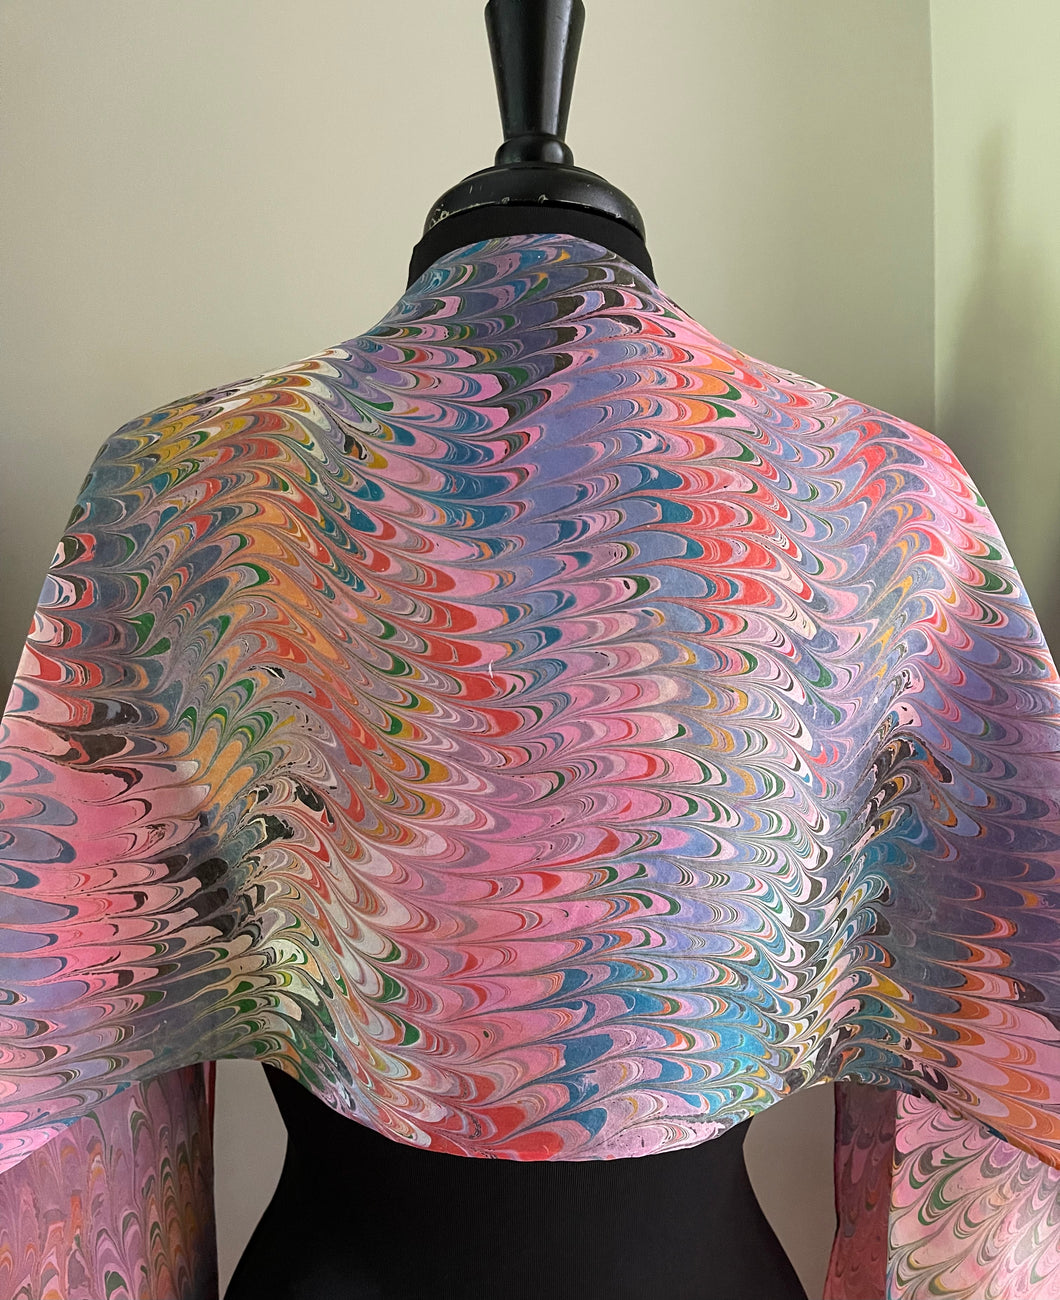 Combed design on multidyed silk.  Water Marbled Habotai Silk 14x72.